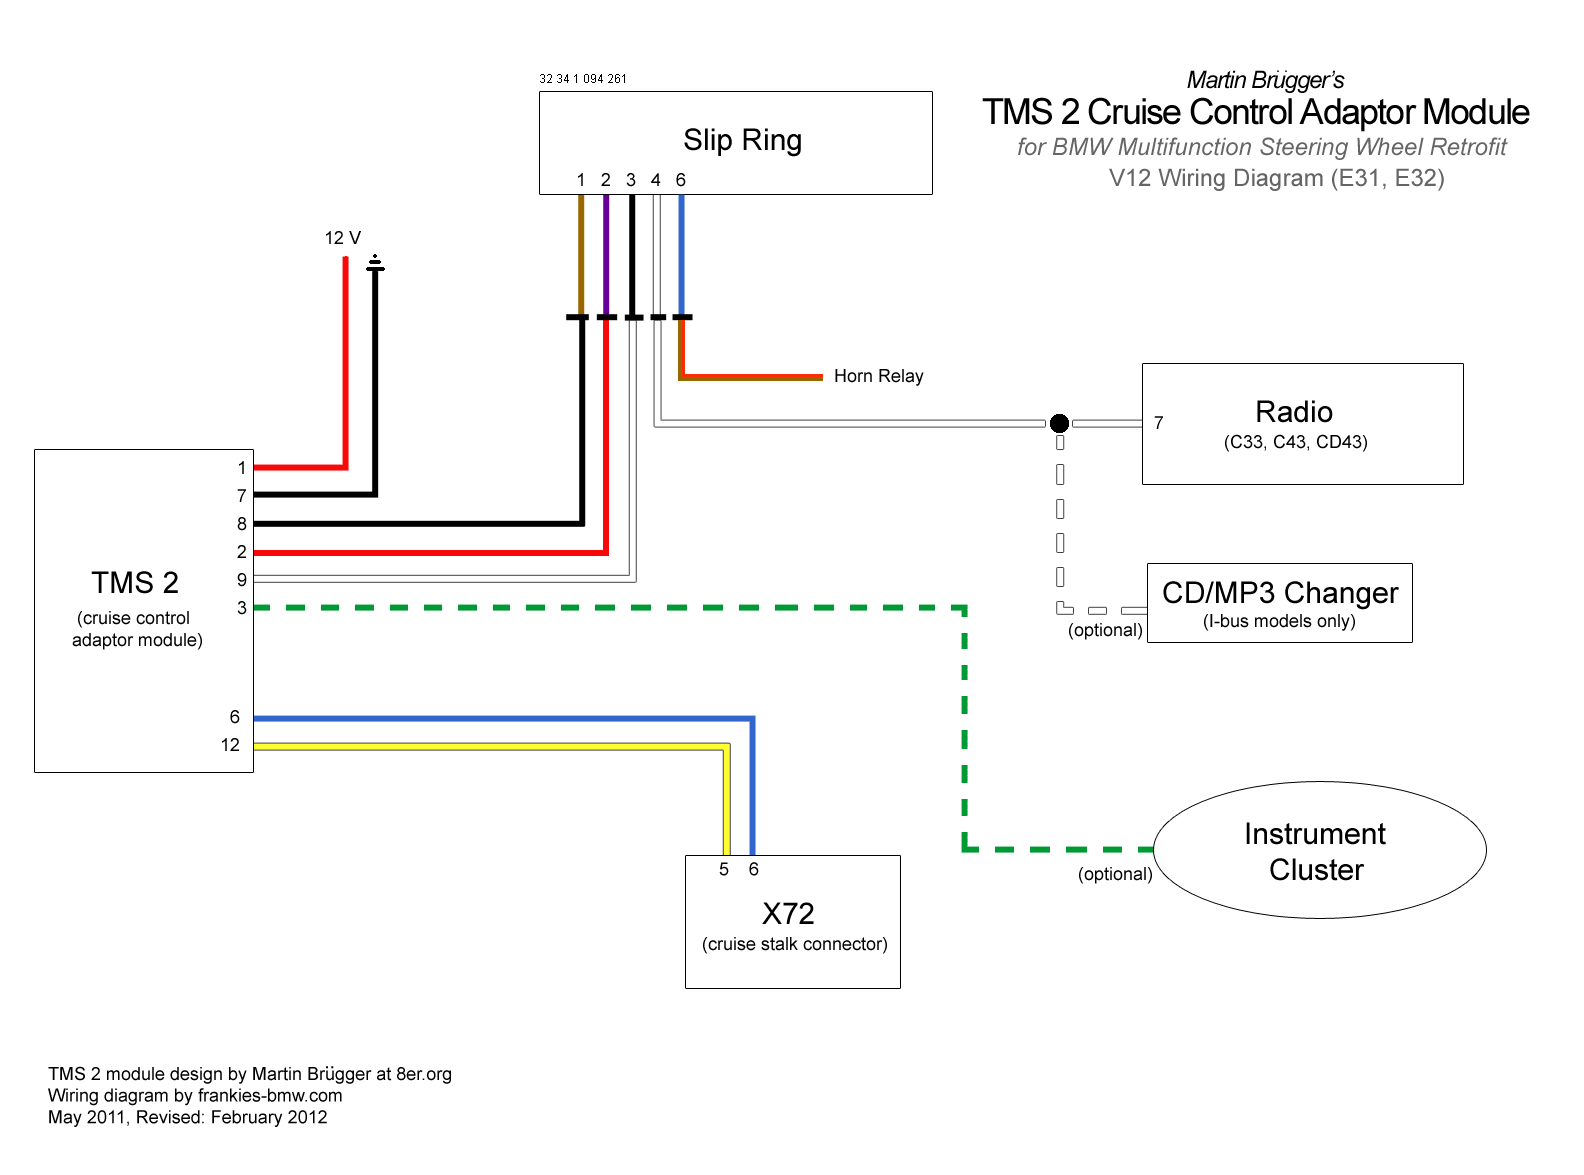 2006 Dodge Charger Radio Wiring Diagram from schematron.org